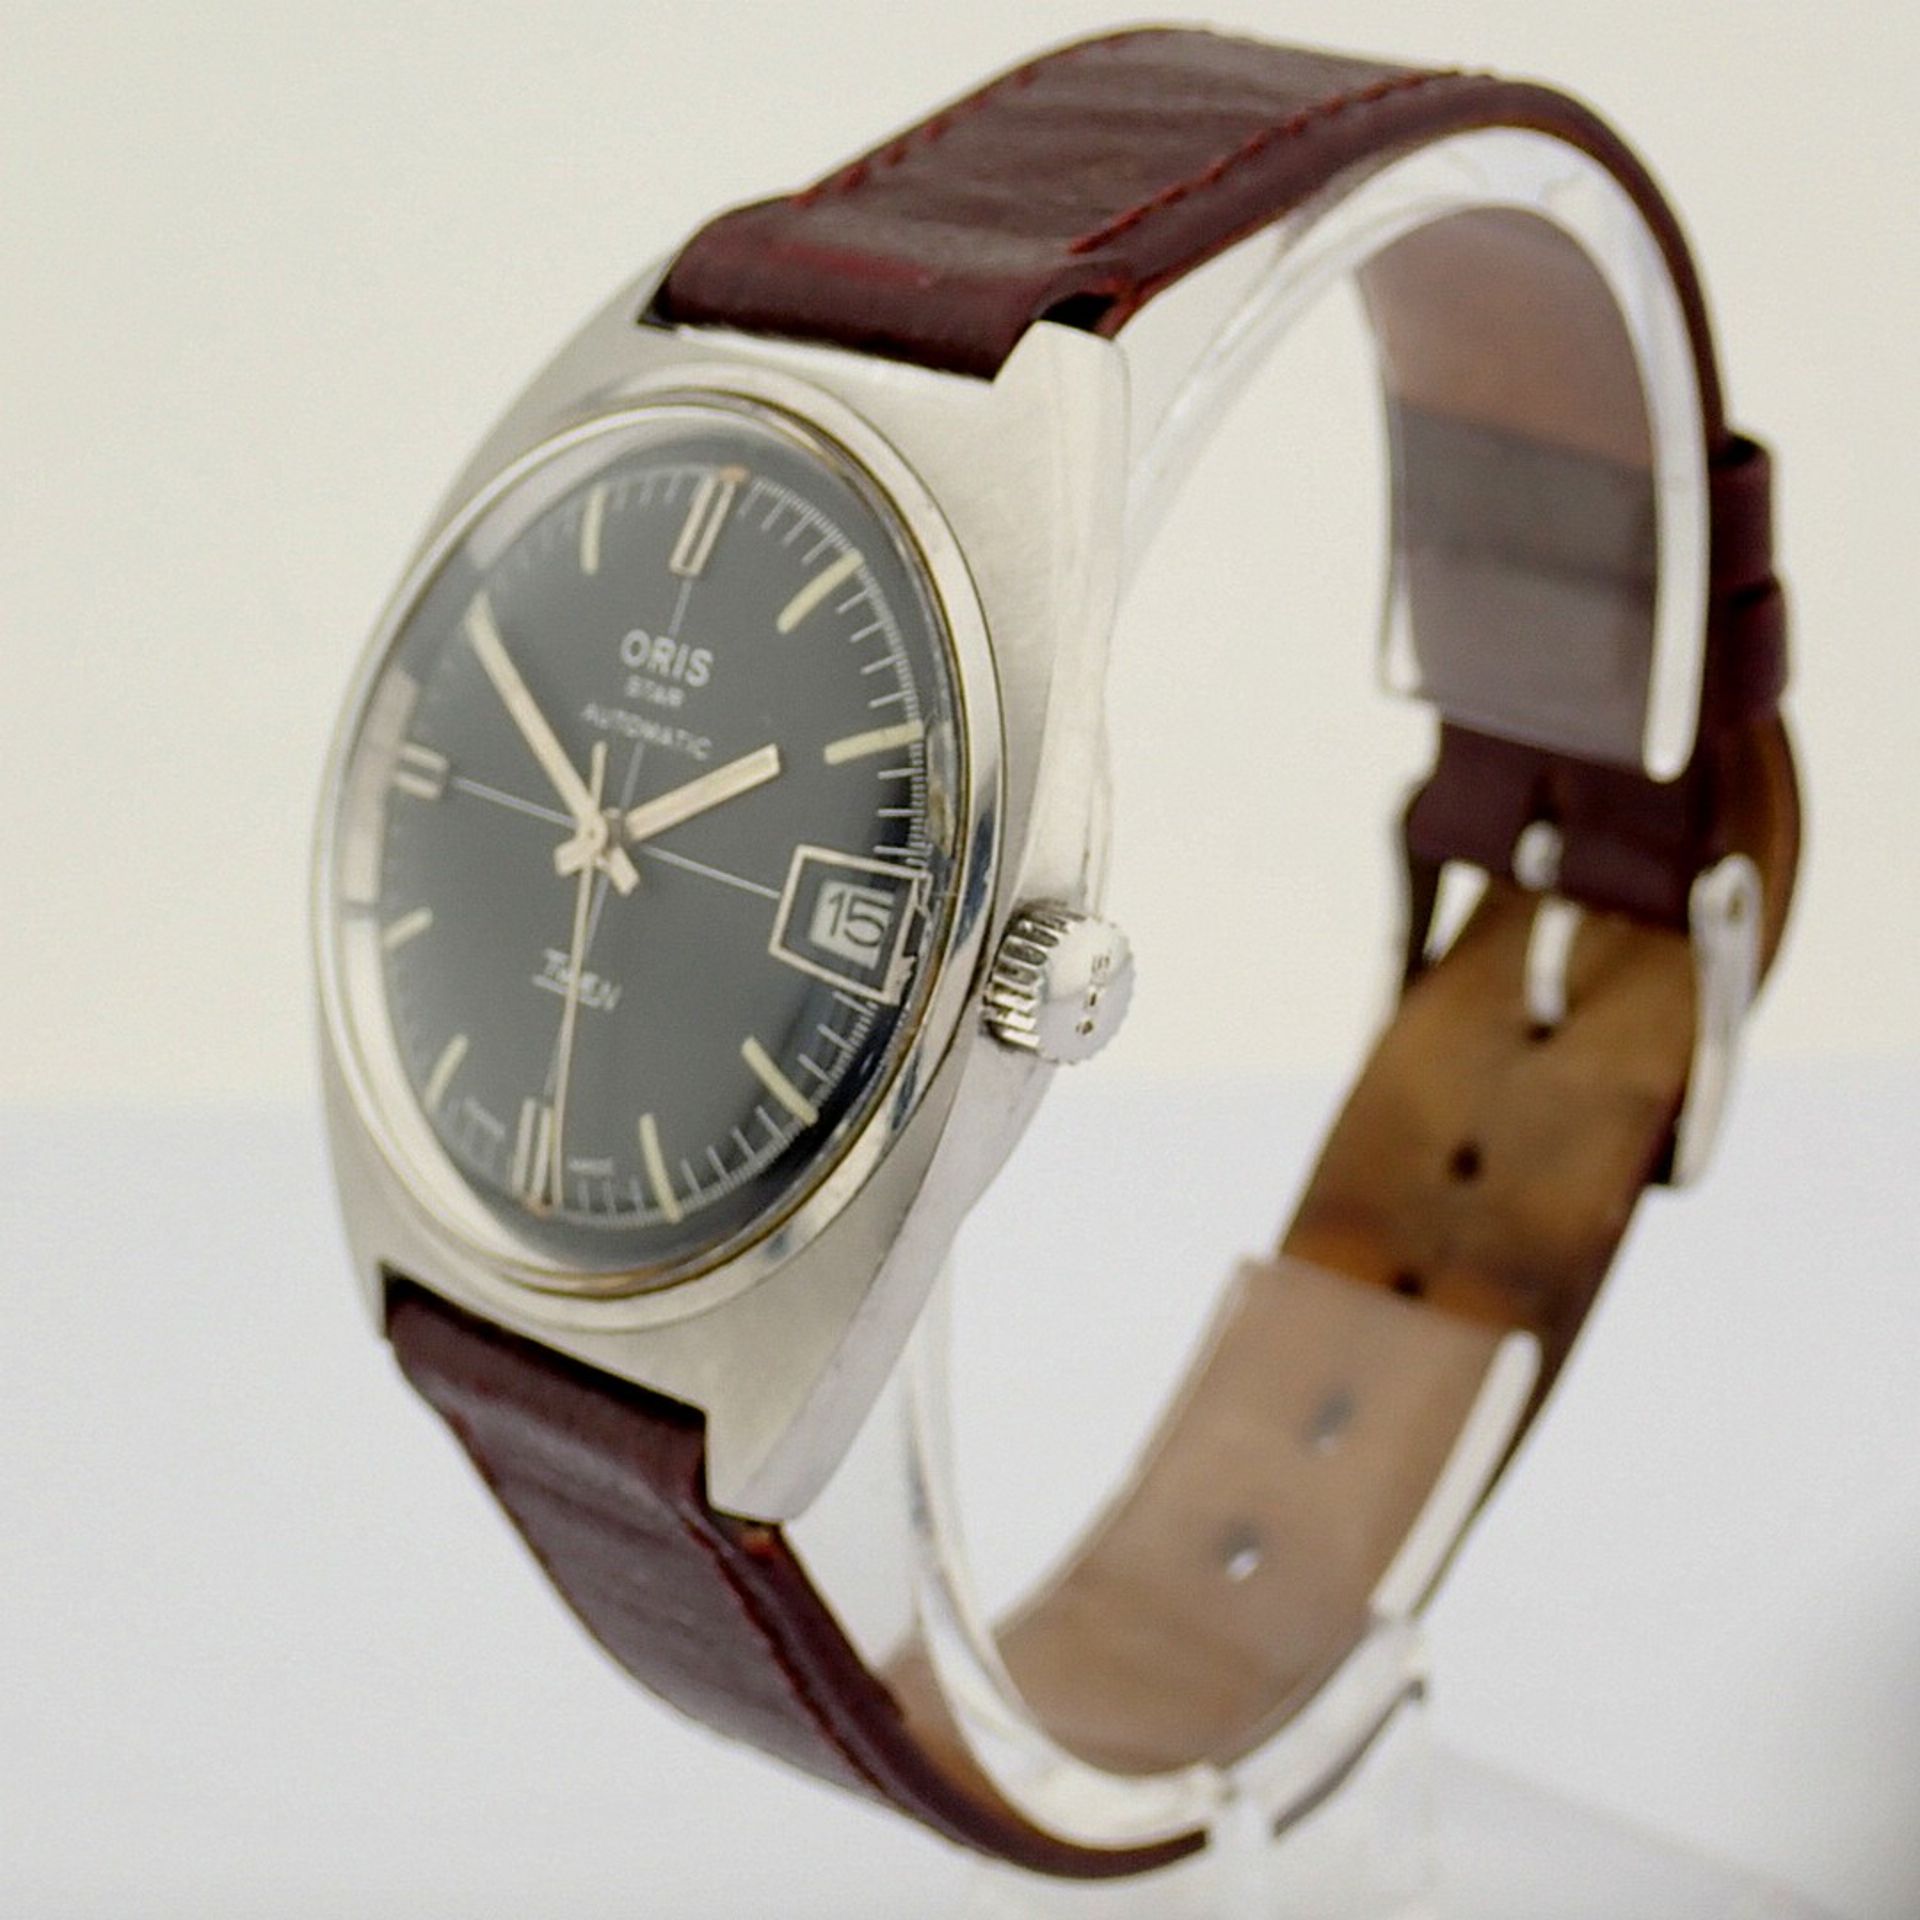 Oris / Oris Star Automatic Twen - Gentlemen's Steel Wrist Watch - Image 6 of 10